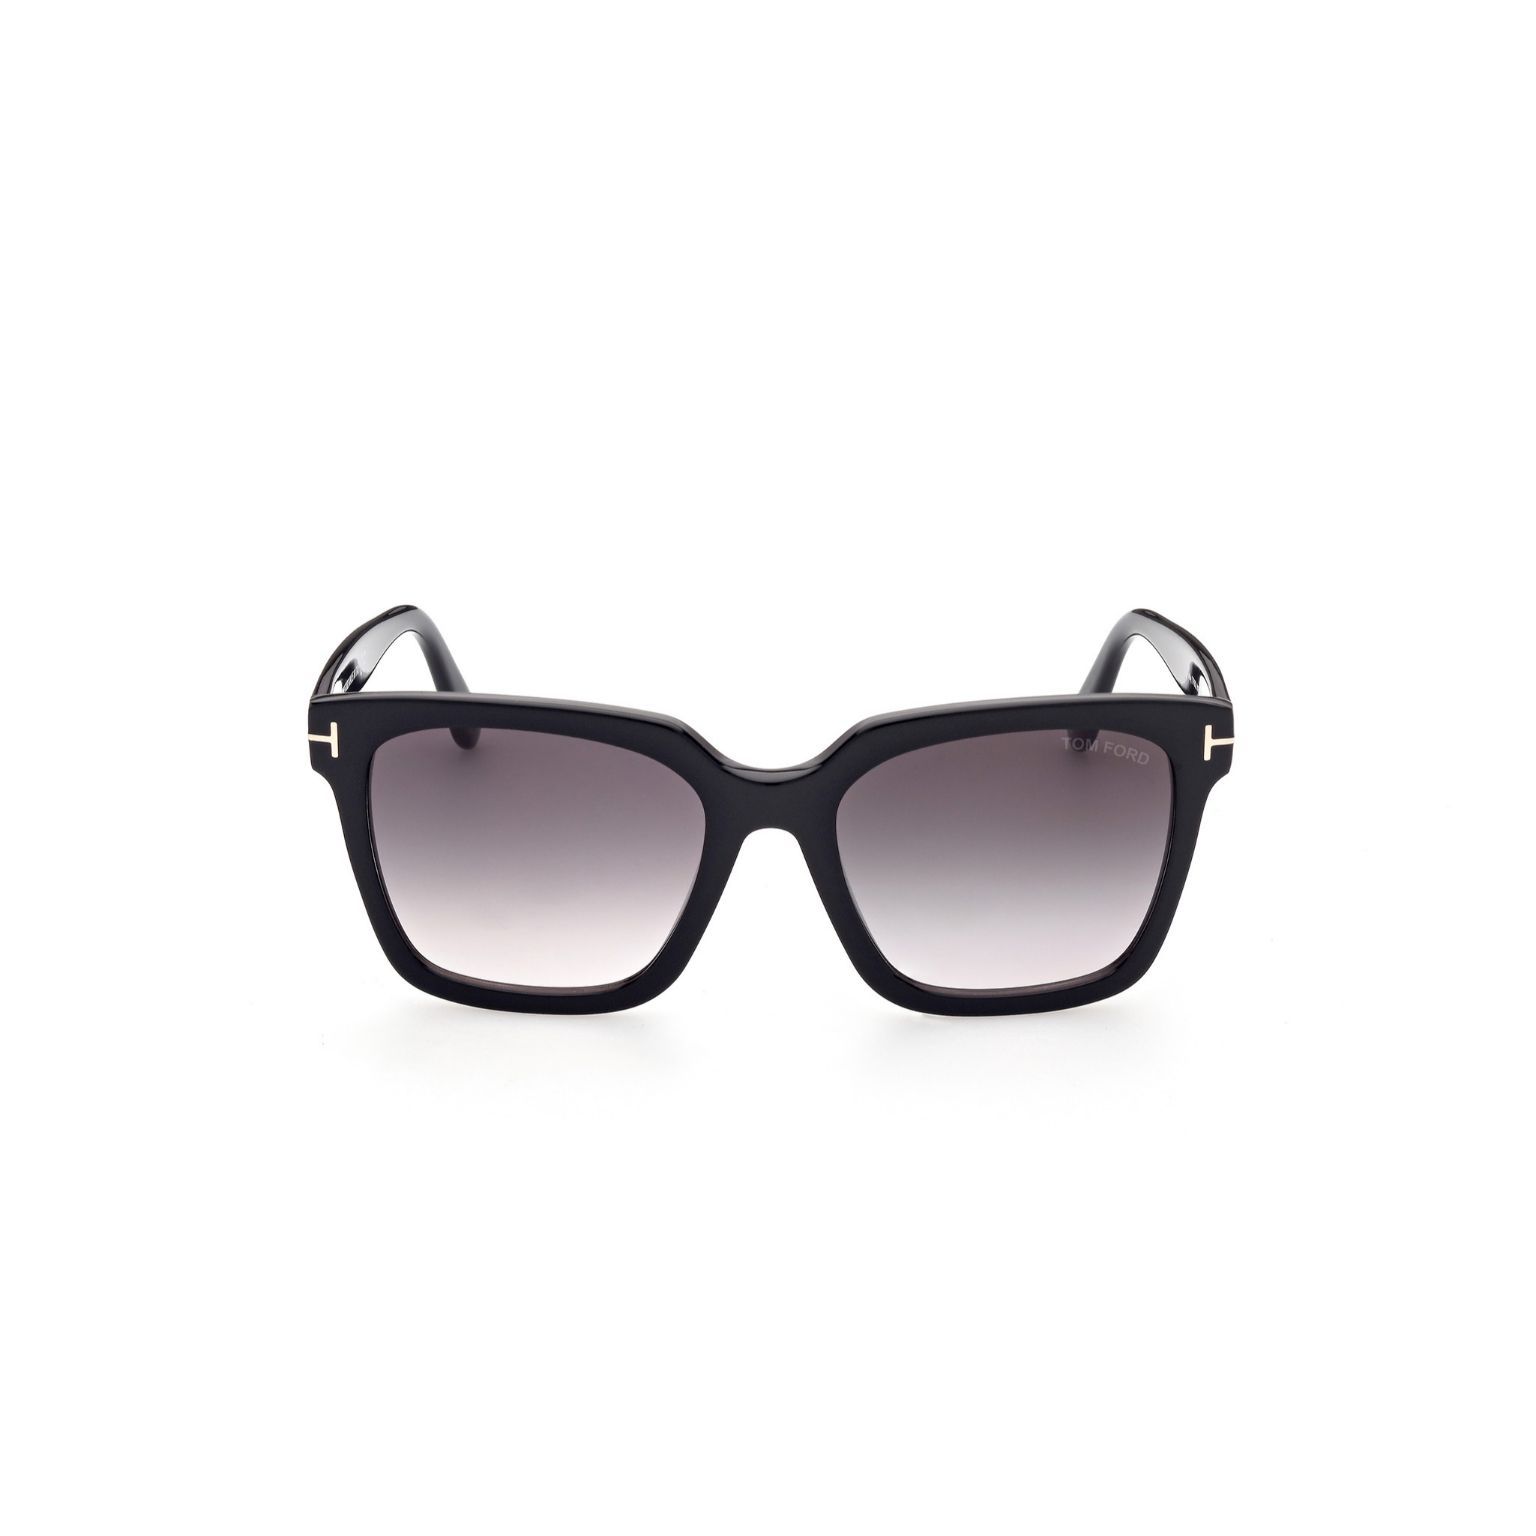 FT0952 Square Sunglasses 01B - size 55